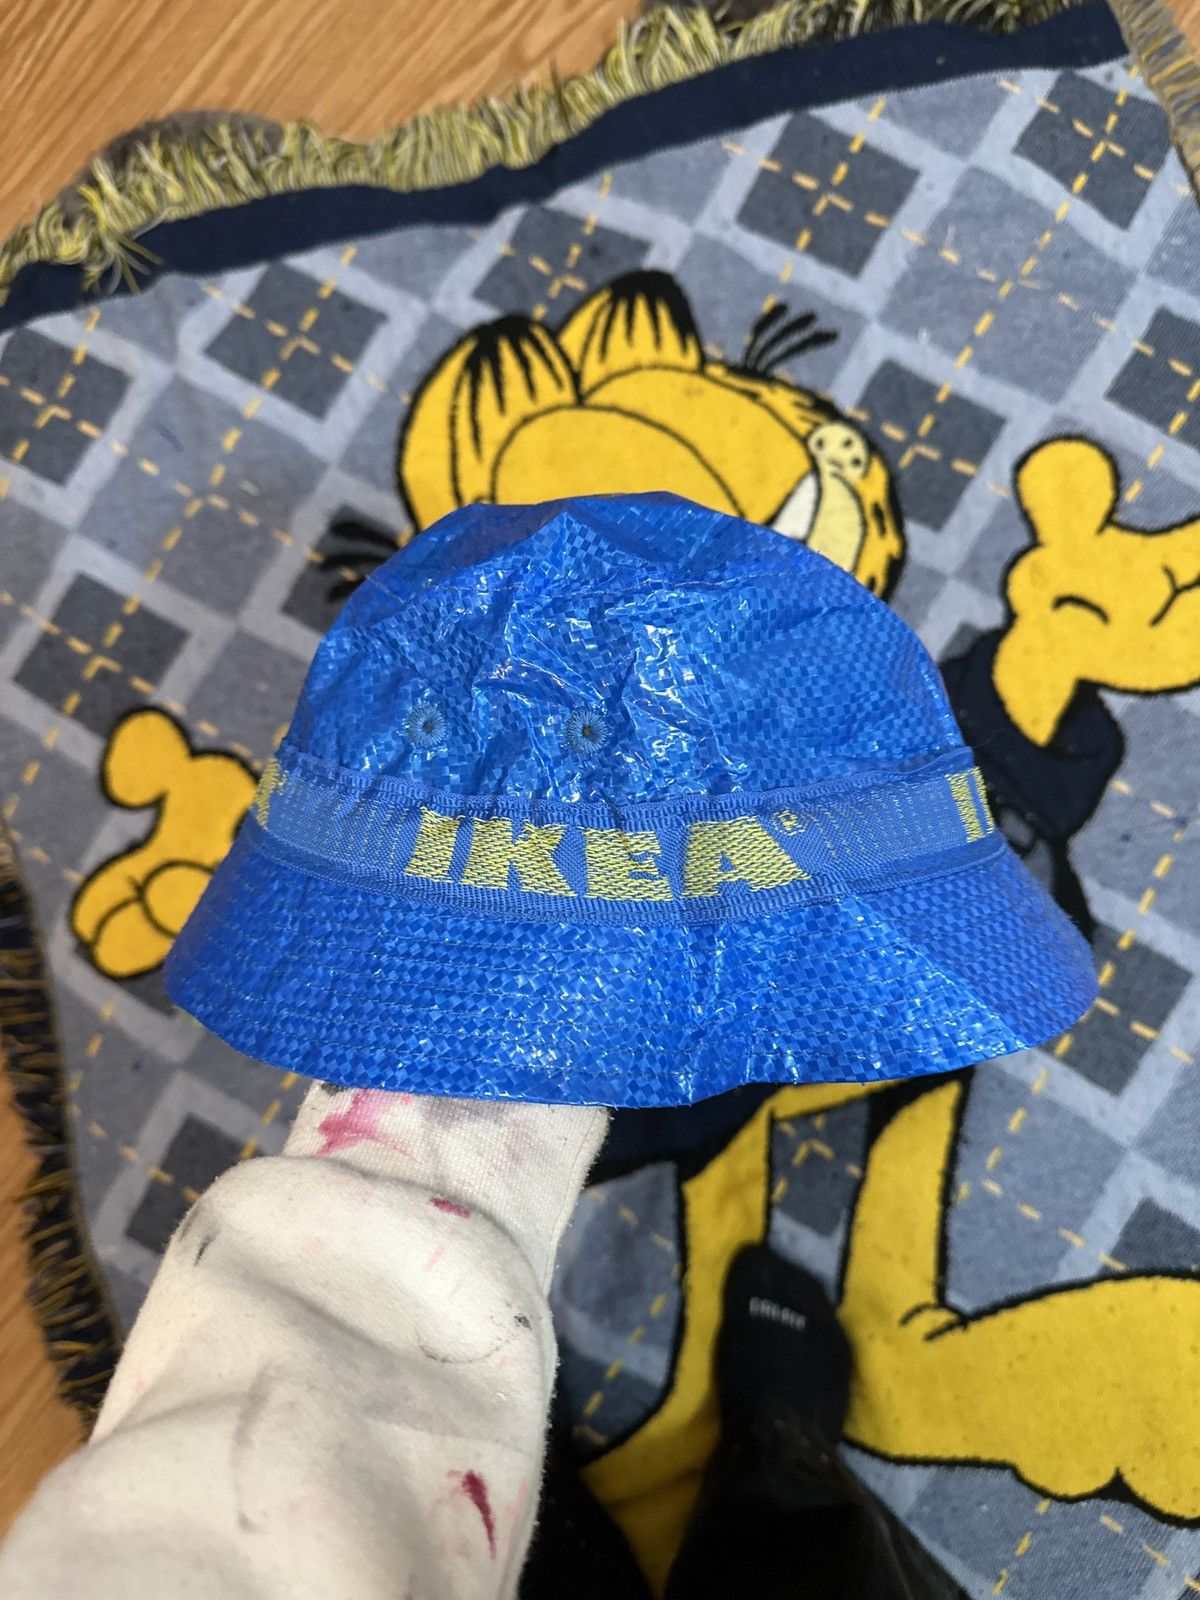 Men's Ikea Hats